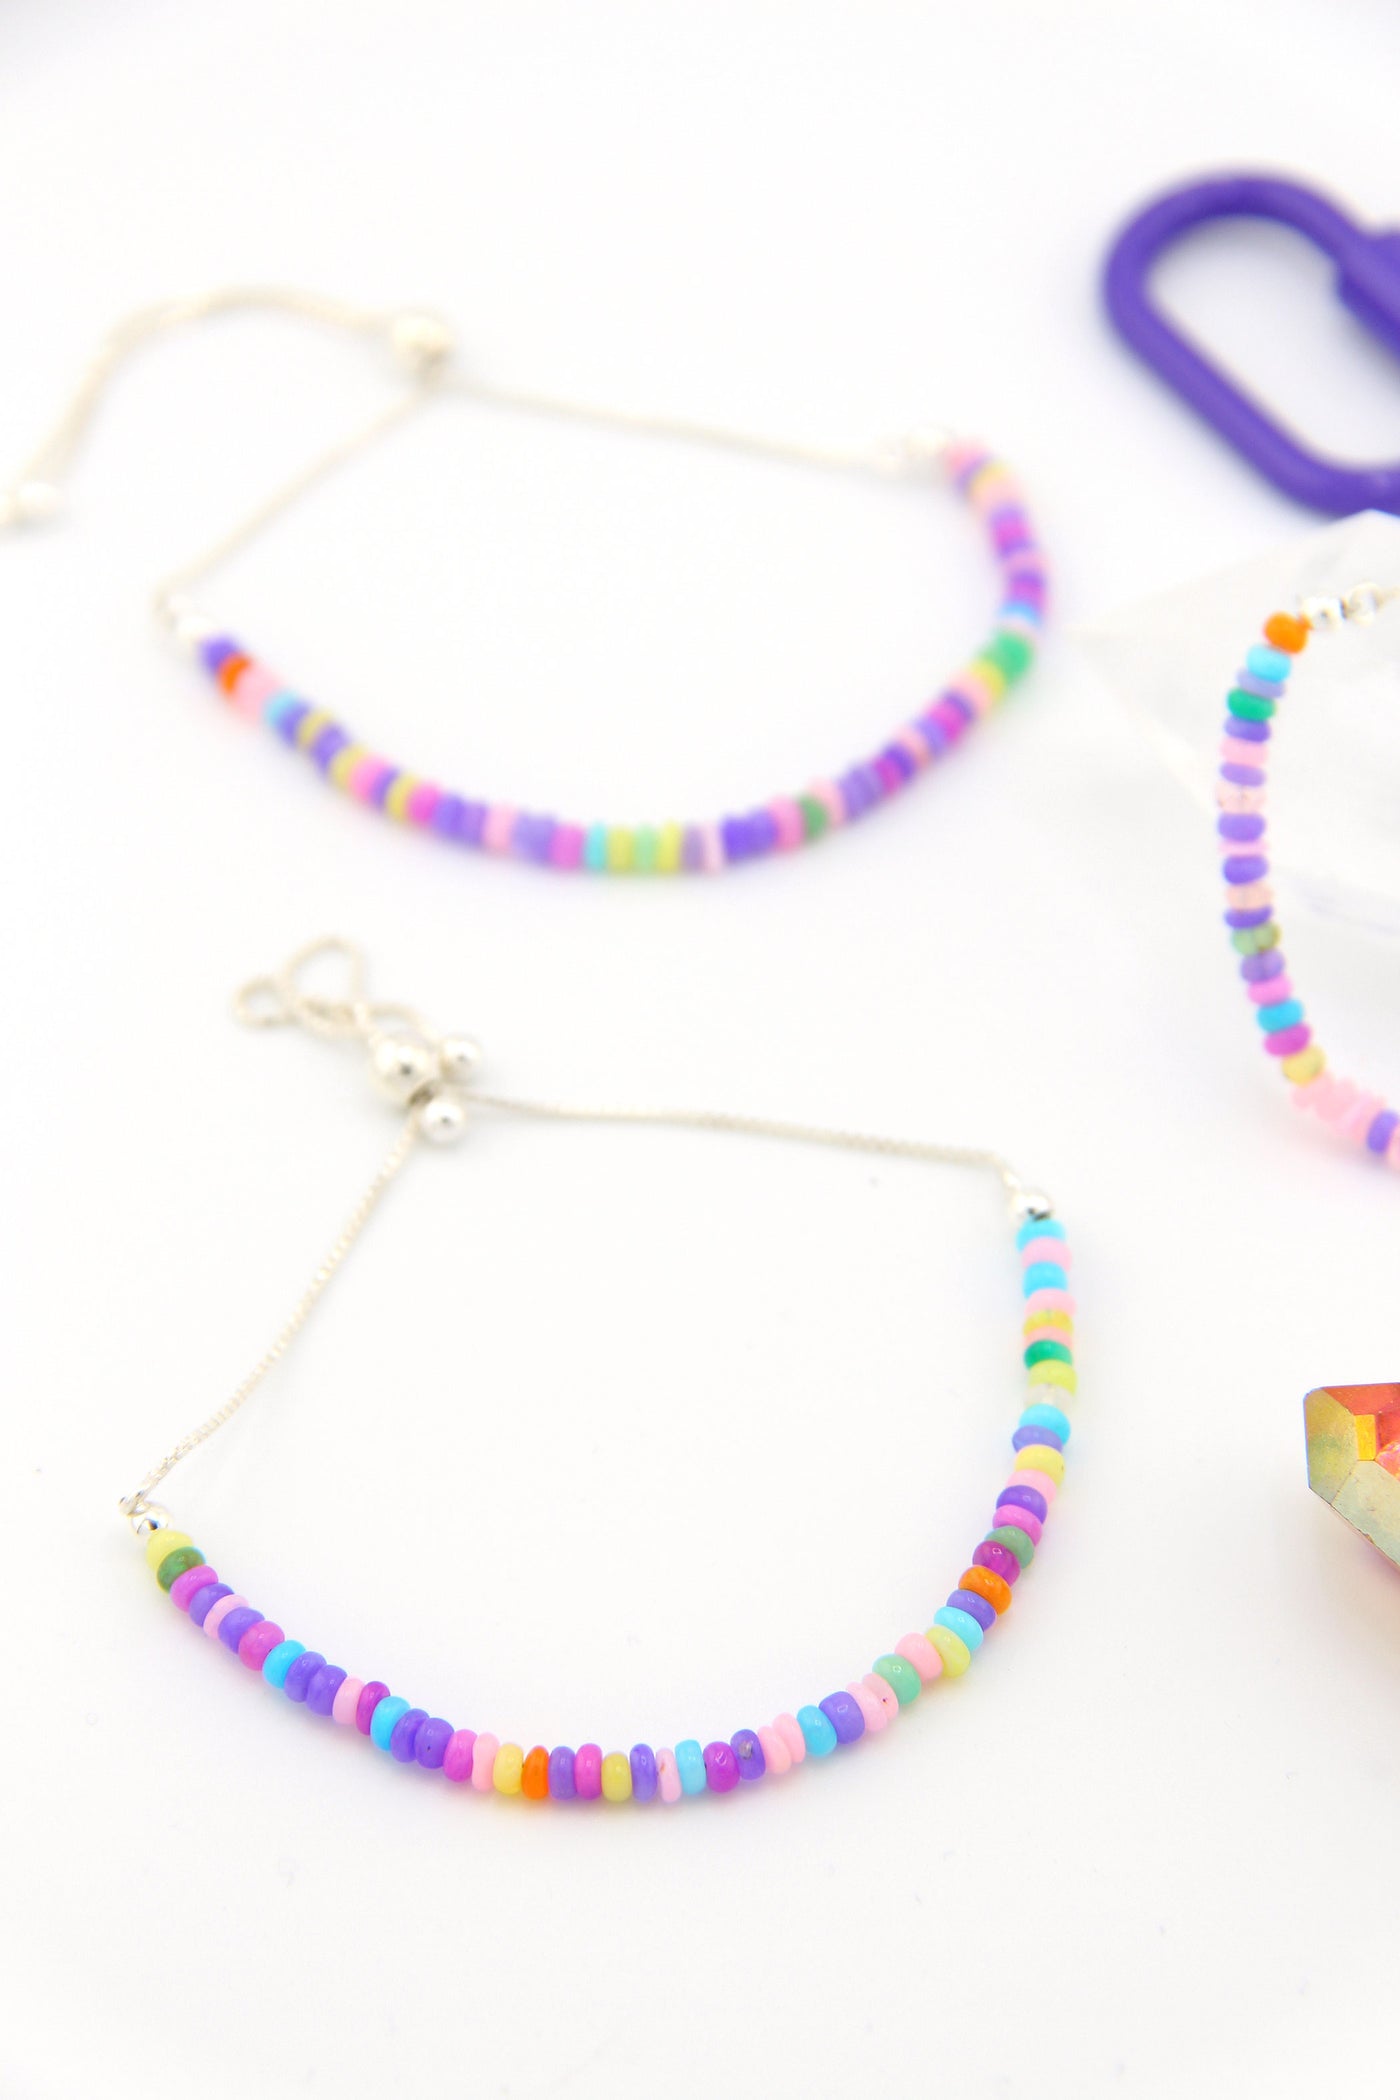 Ethiopian Opal & Sterling Silver Bead Bracelet, Adjustable, Multi Color Rainbow Beaded Gemstone Bracelet